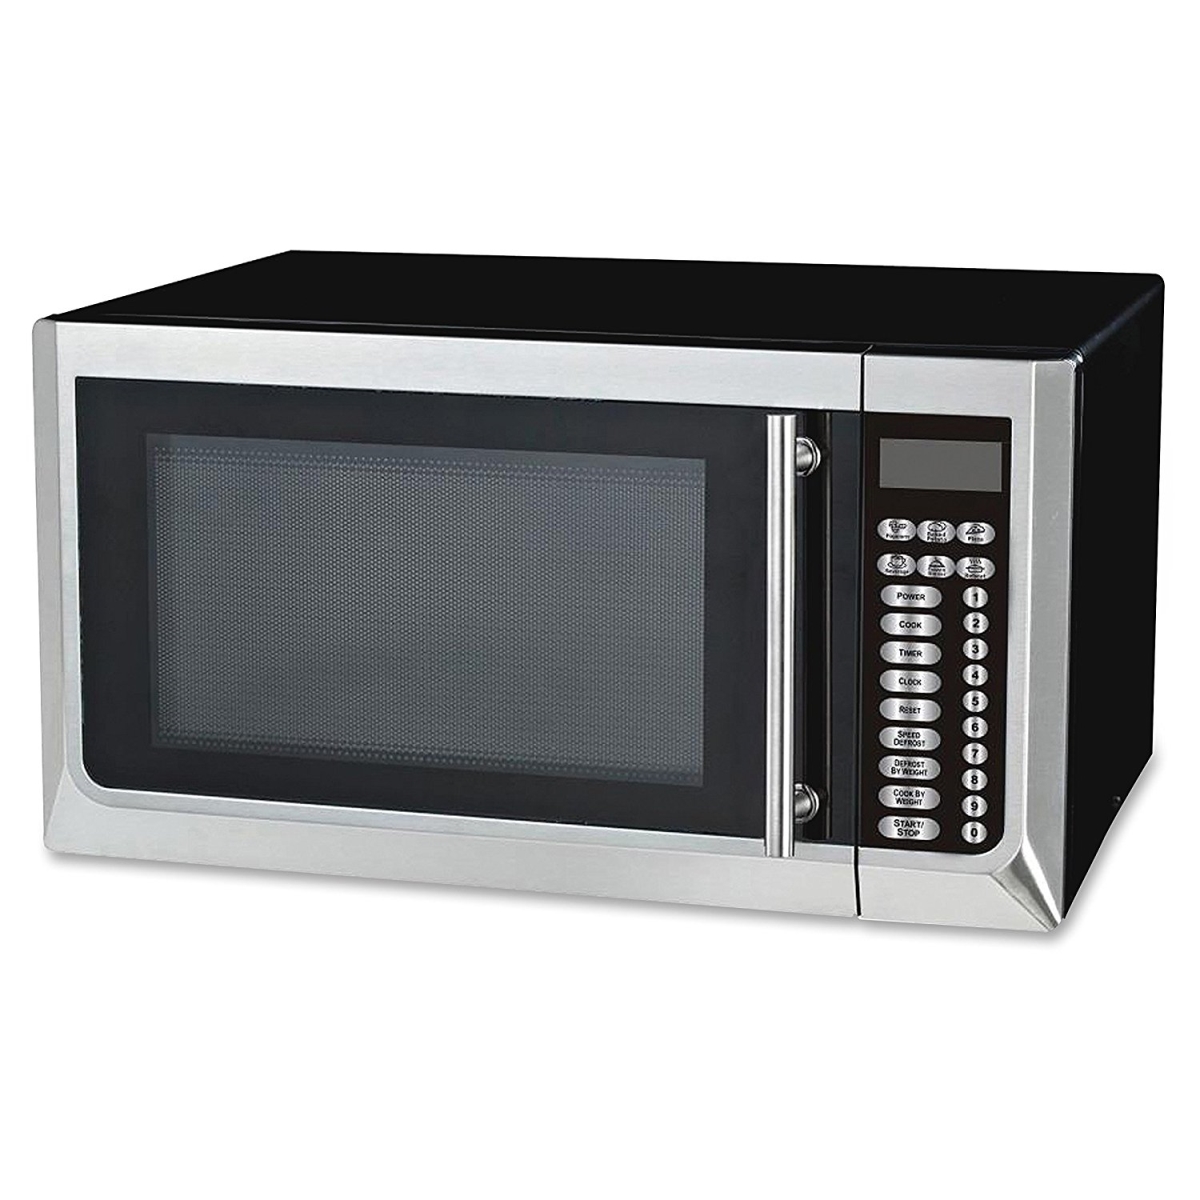 Mt16k3s Stainless Steel Countertop Microwave